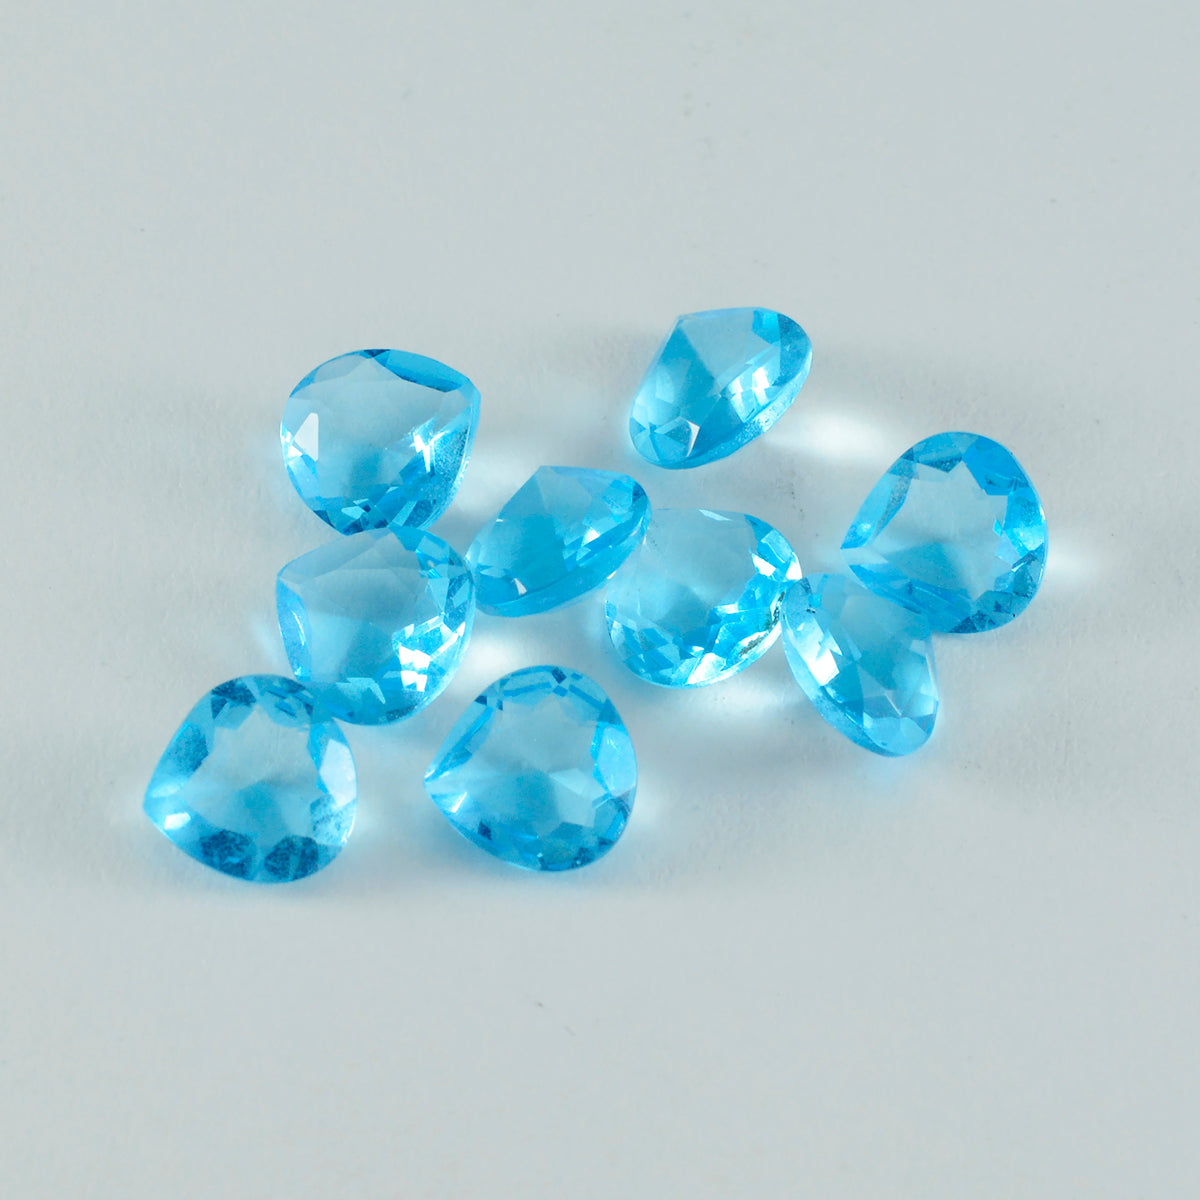 Riyogems 1PC Blue Topaz CZ gefacetteerde 4x4 mm hartvorm knappe kwaliteitsedelstenen